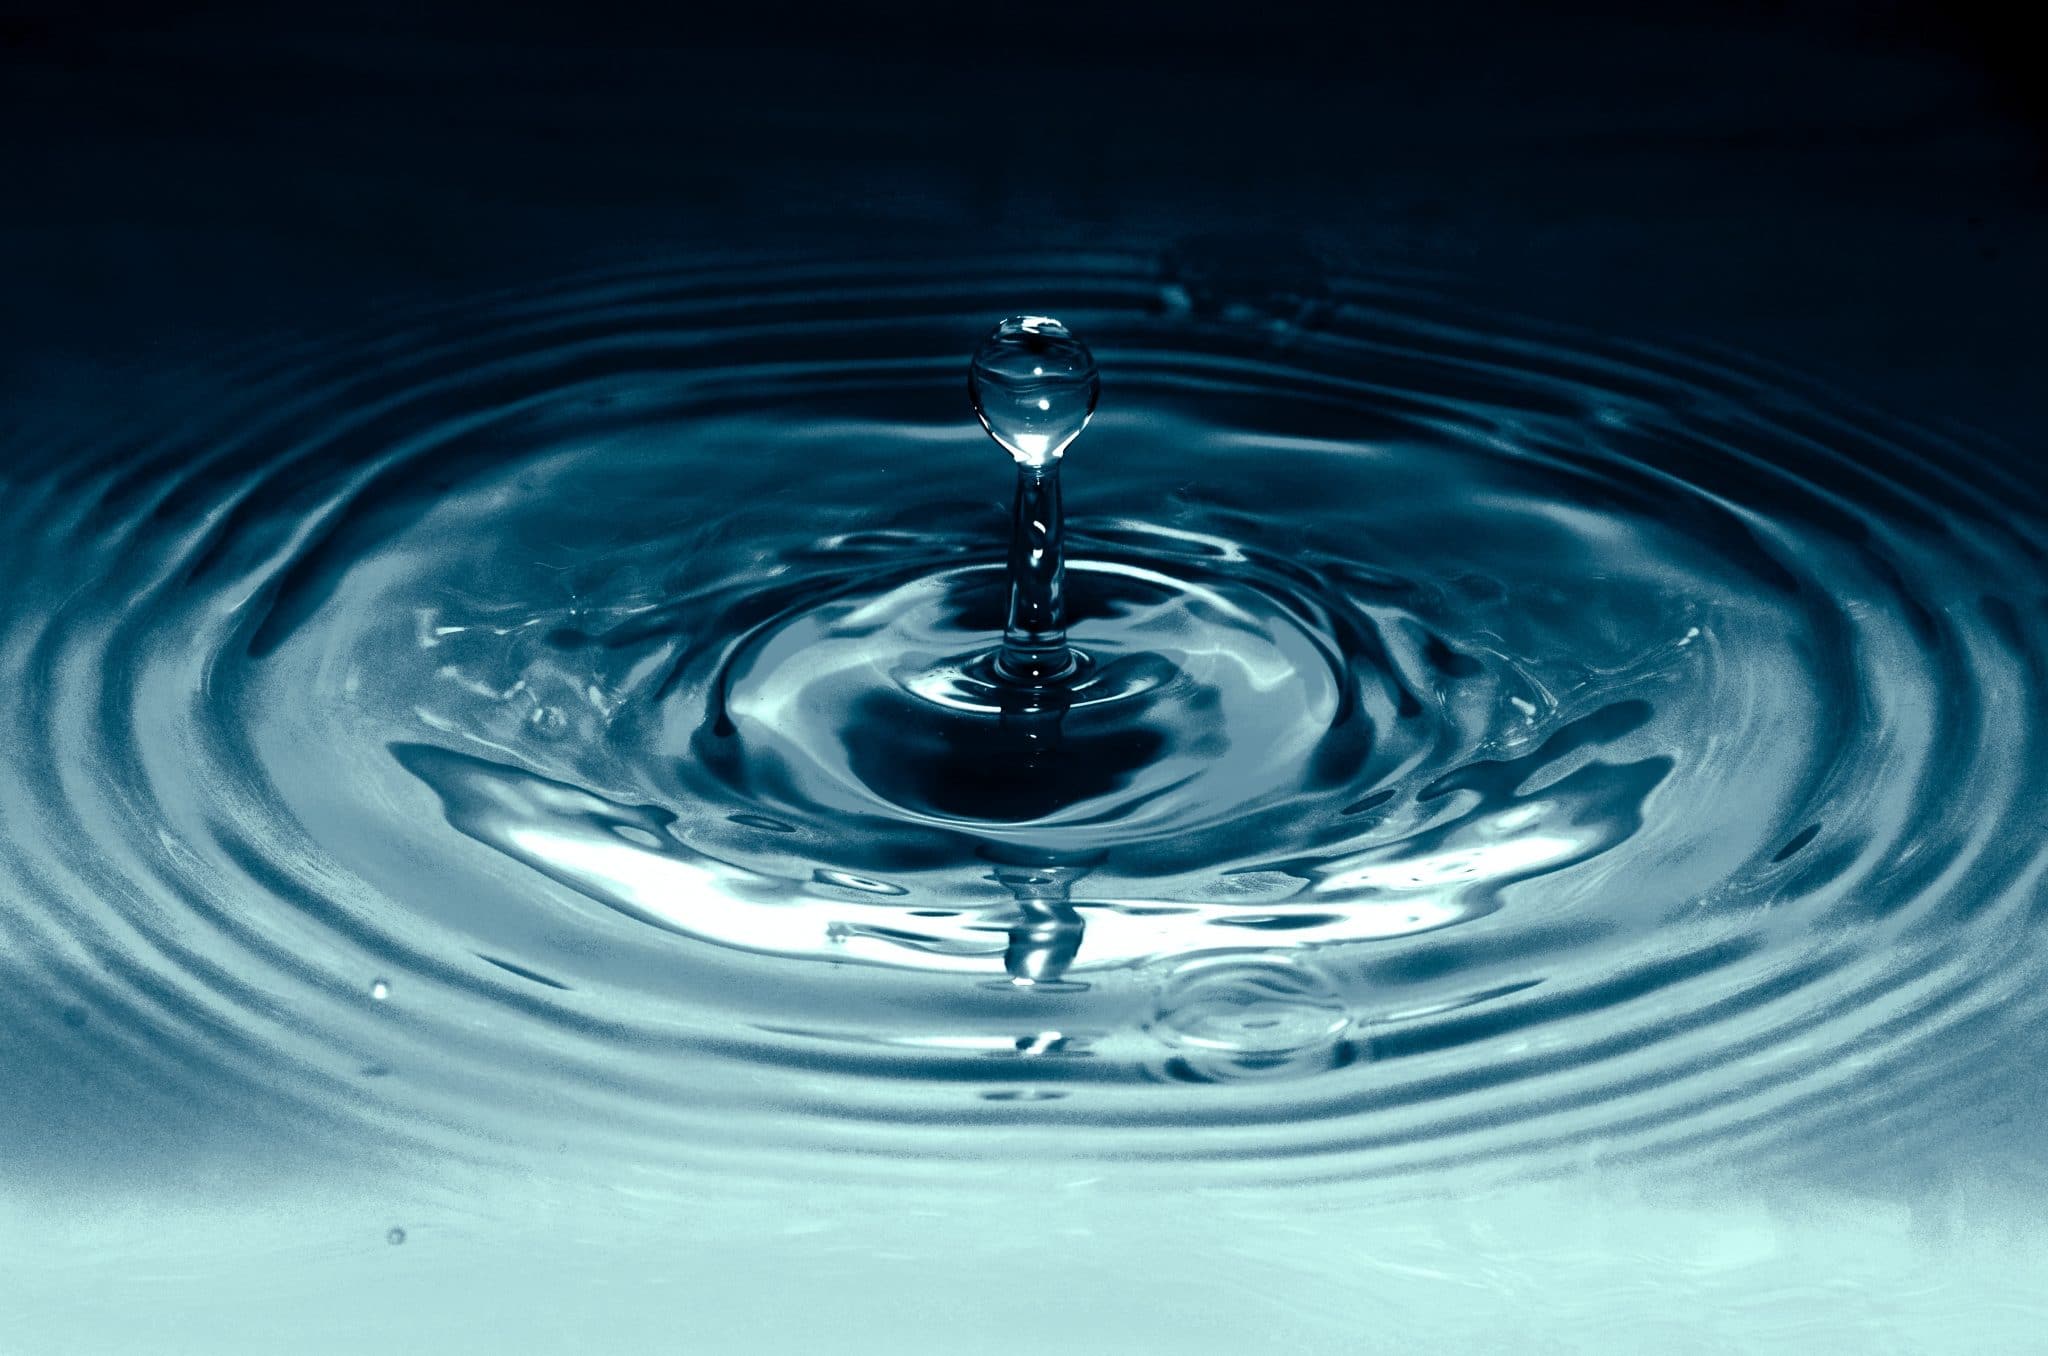 Using Bacteriostatic Water vs. Sterile Water